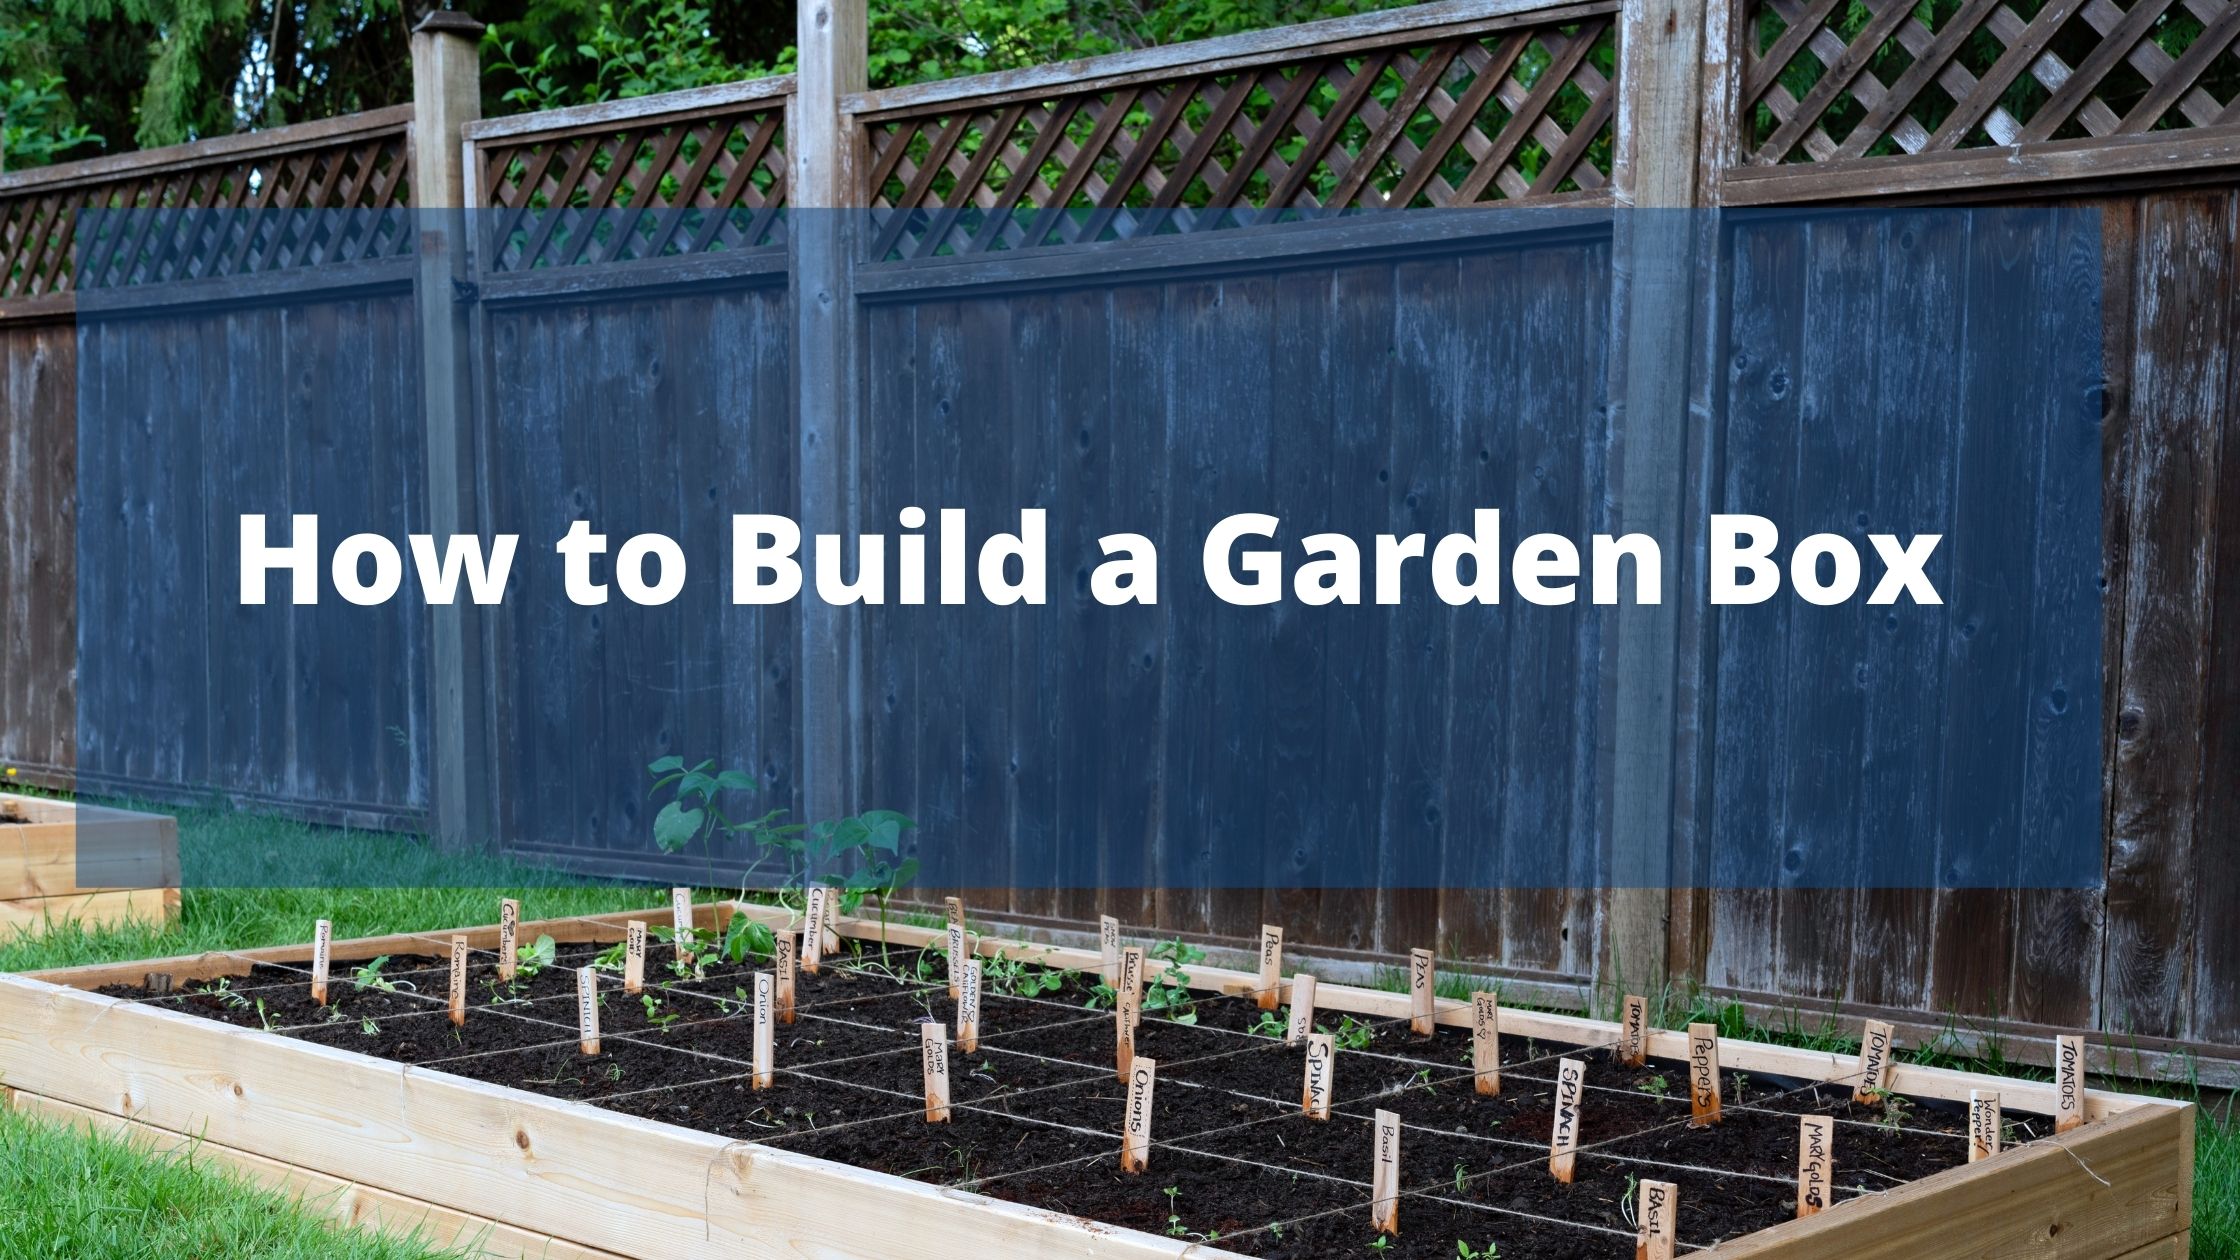 https://handymanconnection.com/parker/wp-content/uploads/sites/68/2021/06/How-to-Build-a-Garden-Box.jpg